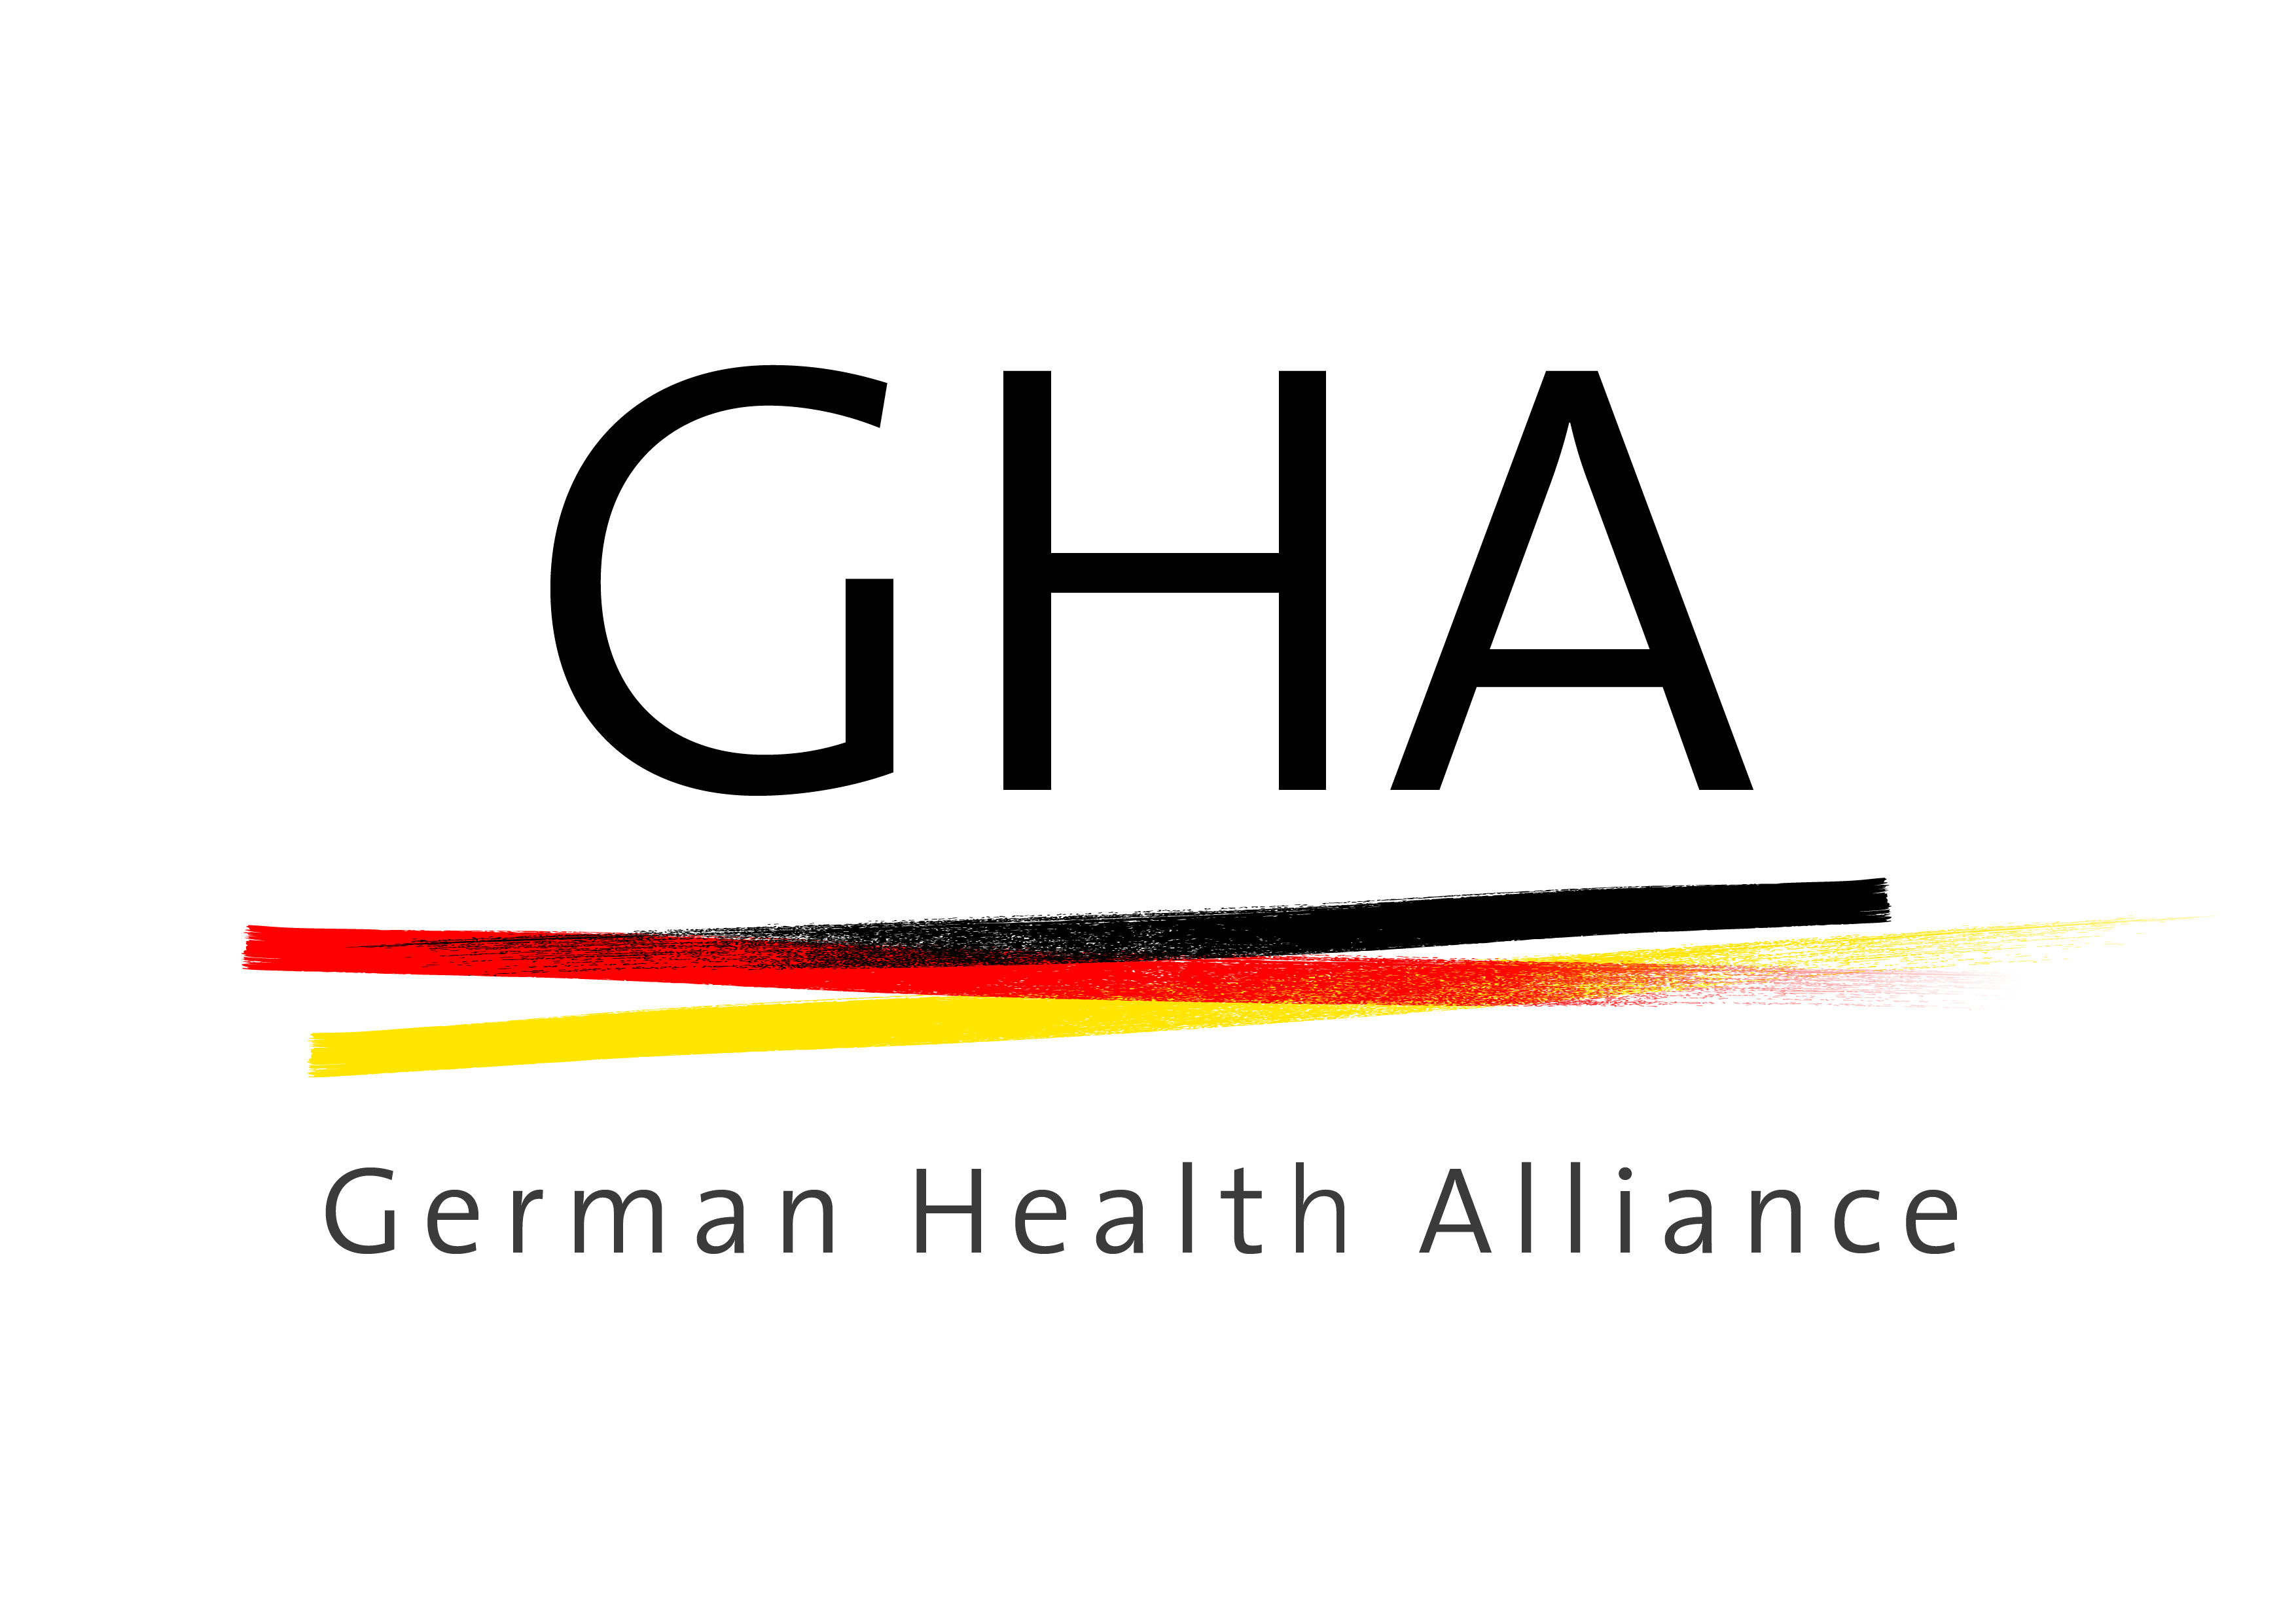 German Health Alliance